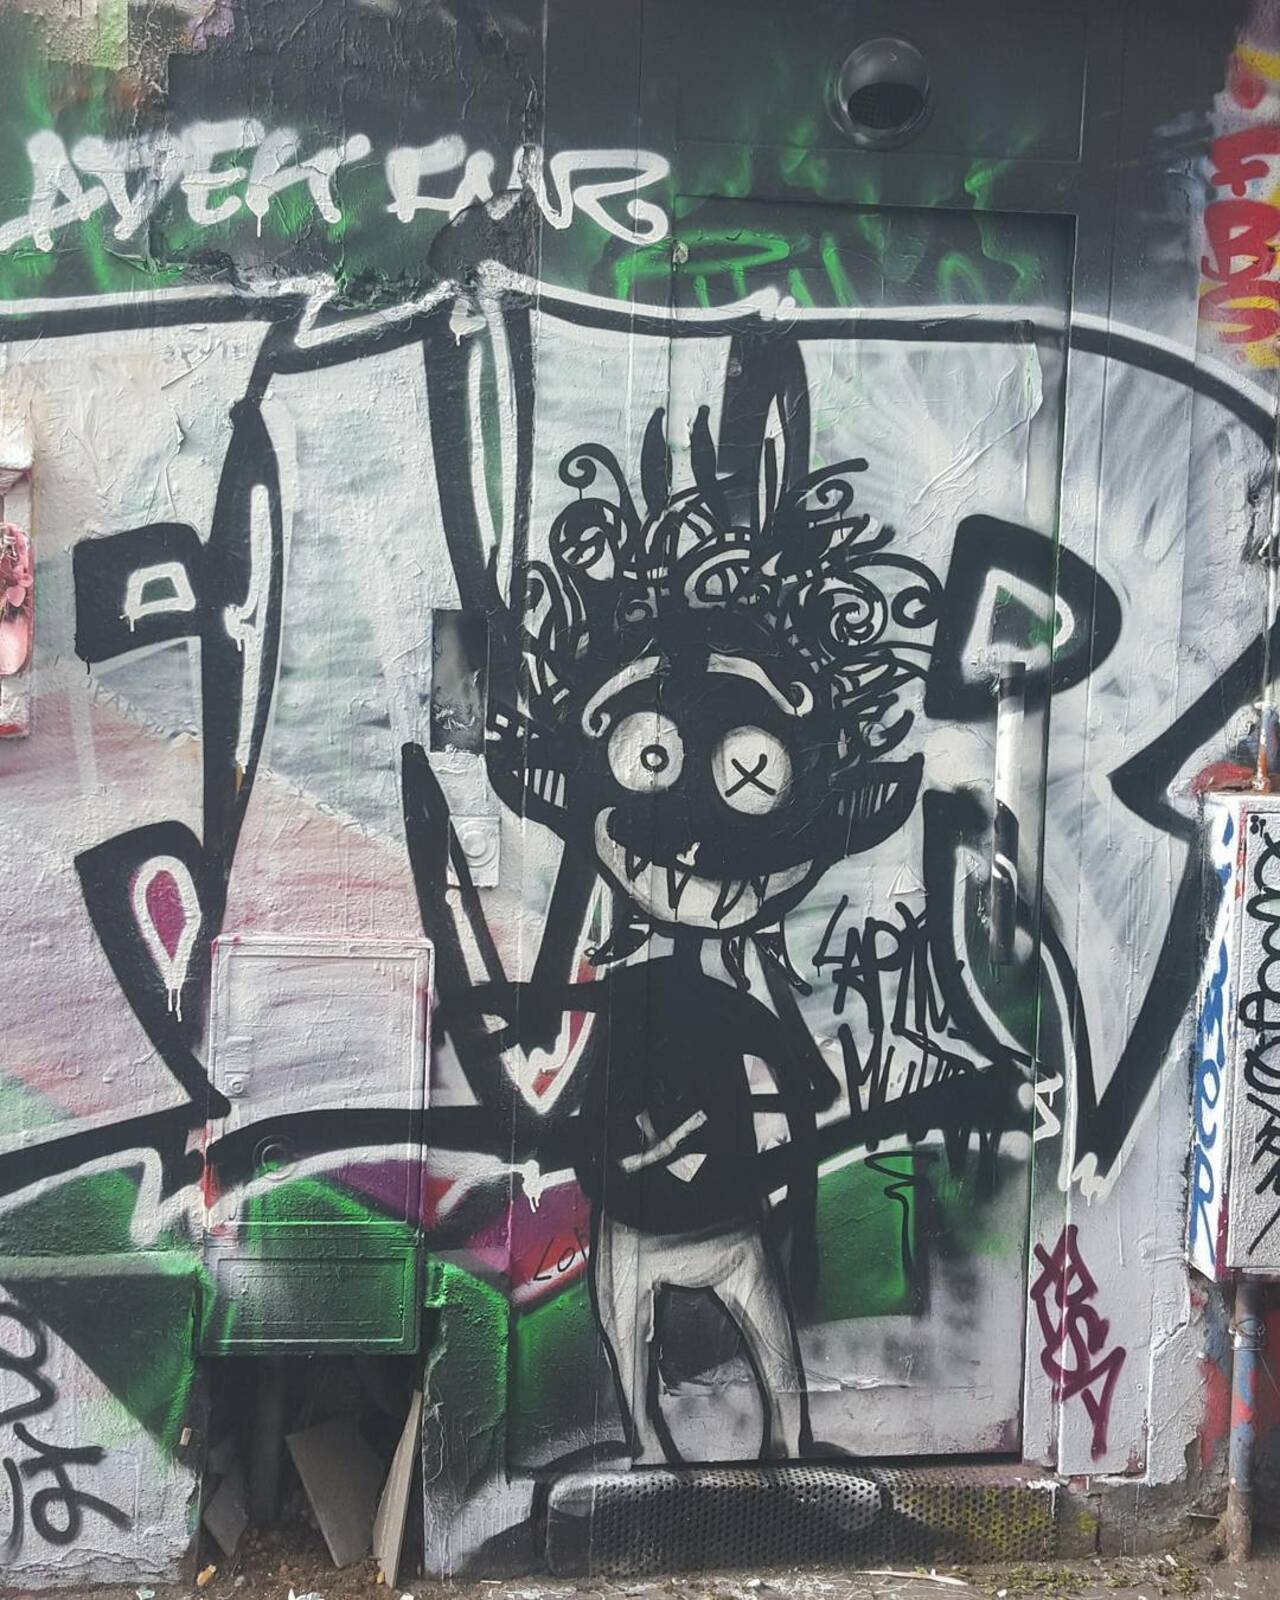 #Paris #graffiti photo by @jdewey67 http://ift.tt/1PG3gIY #StreetArt http://t.co/8c4PFU6SDX